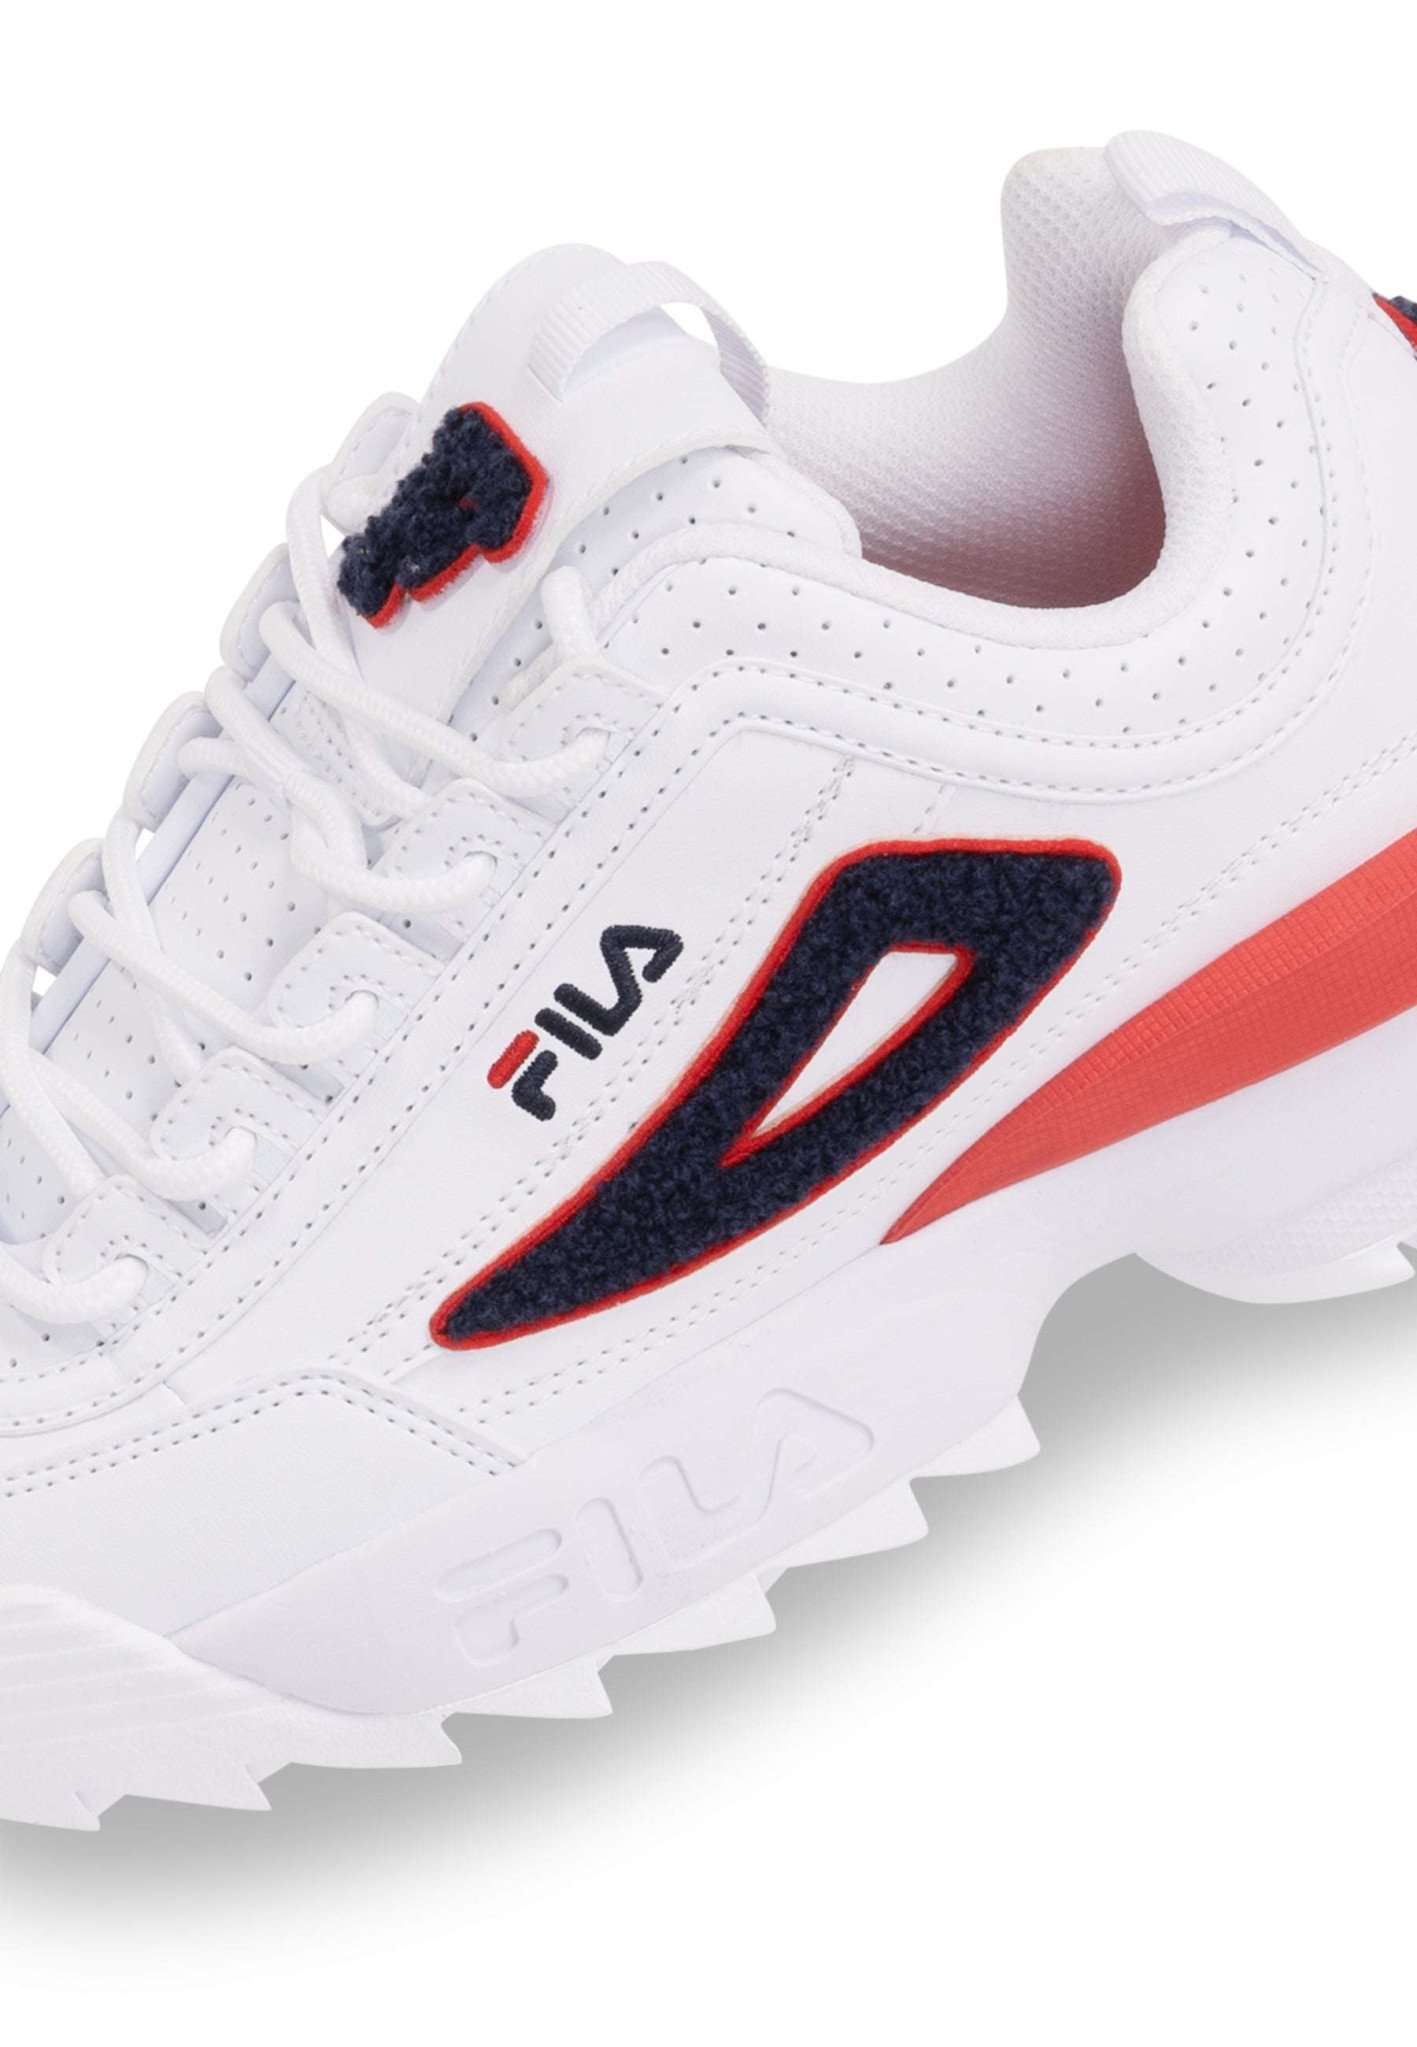 Disruptor Patch Wmn in White-Fila Navy Sneakers Fila   